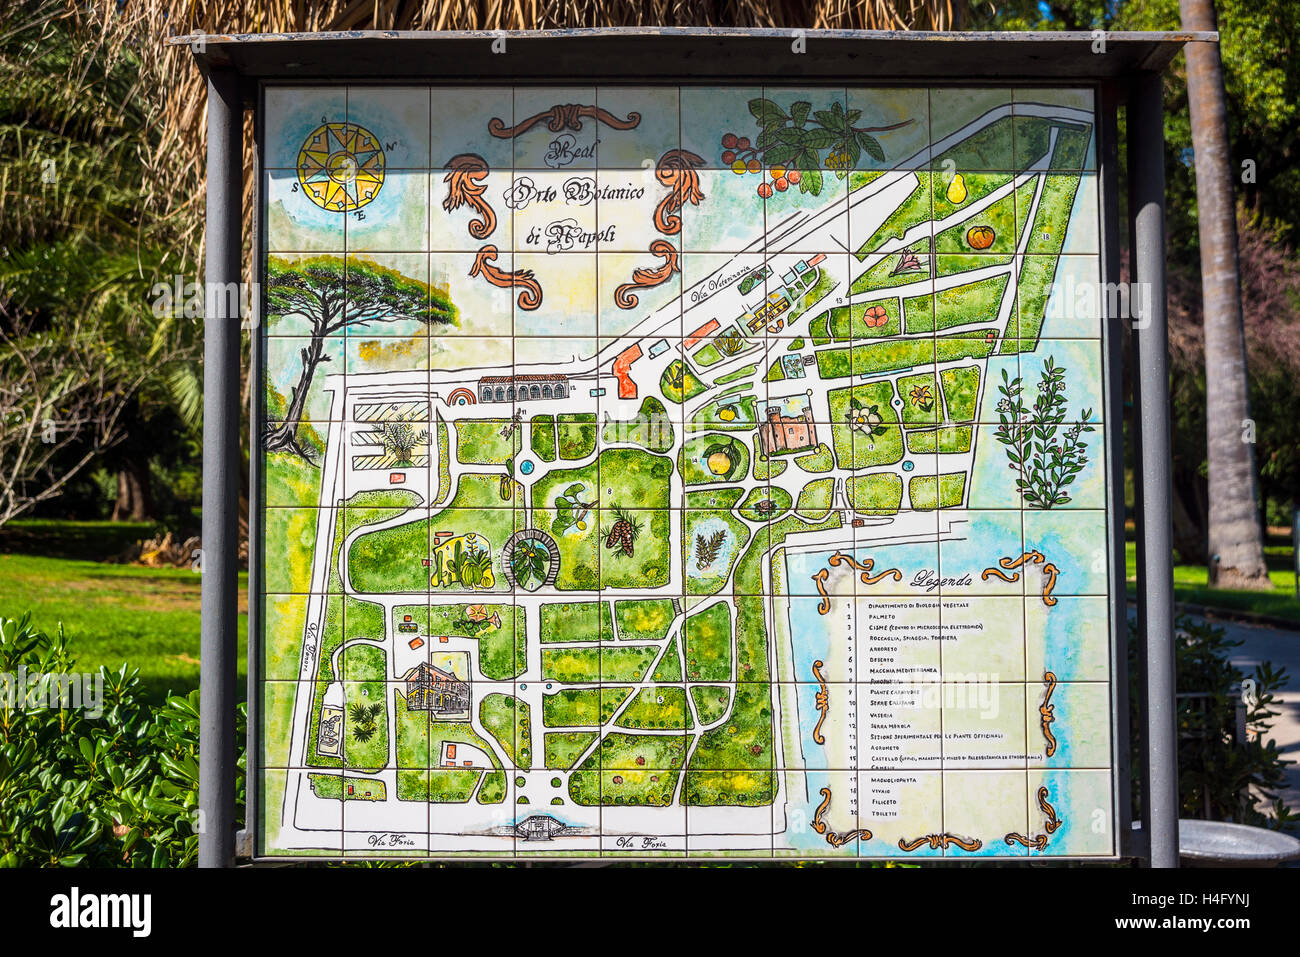 Naples italy map of the botanical garden Stock Photo